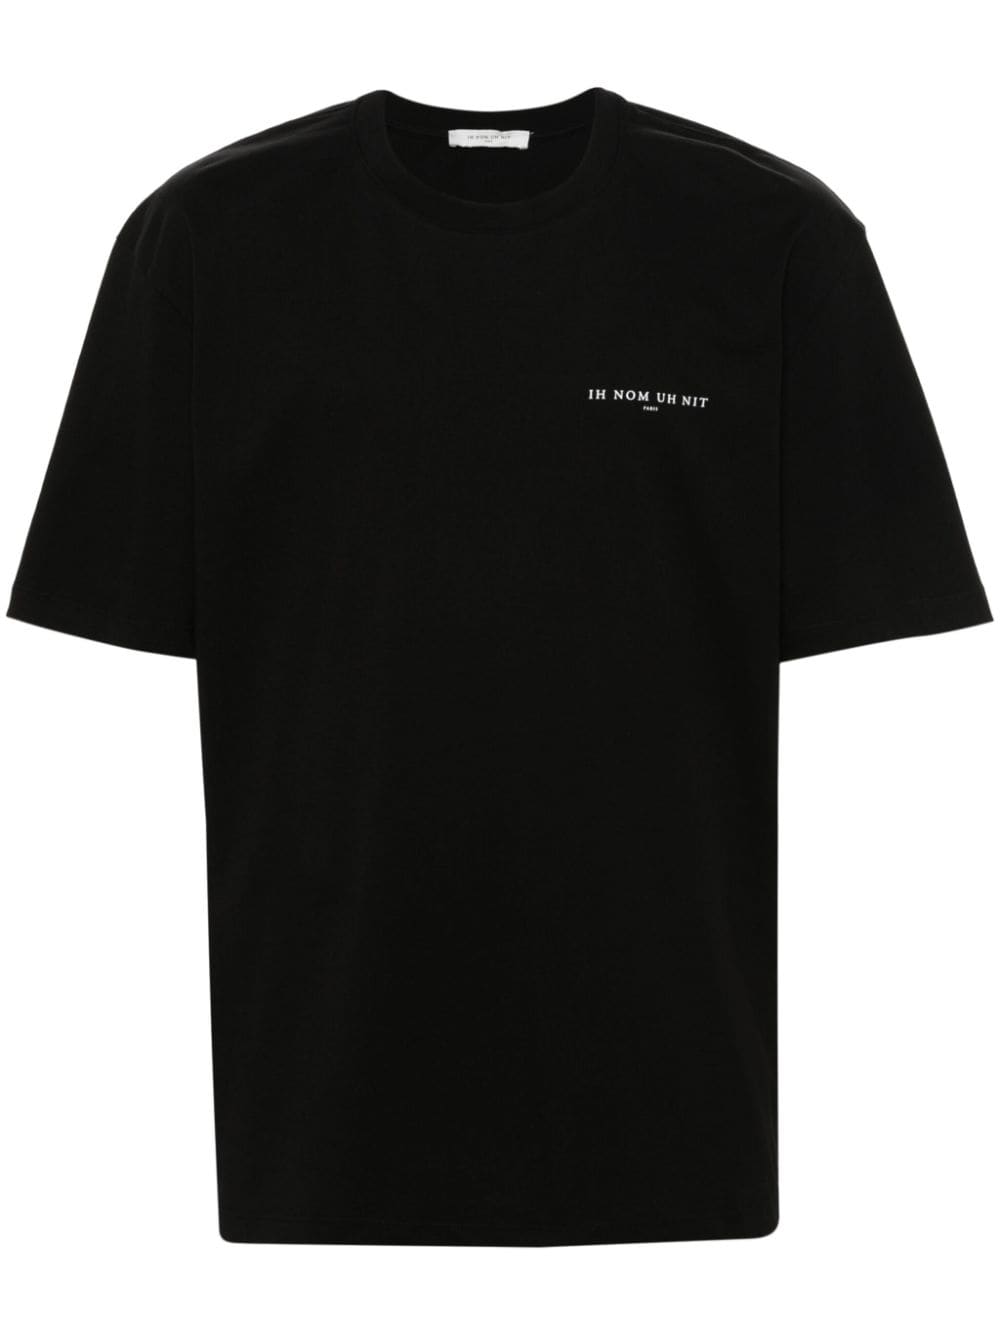 Black t-shirt with logo writing